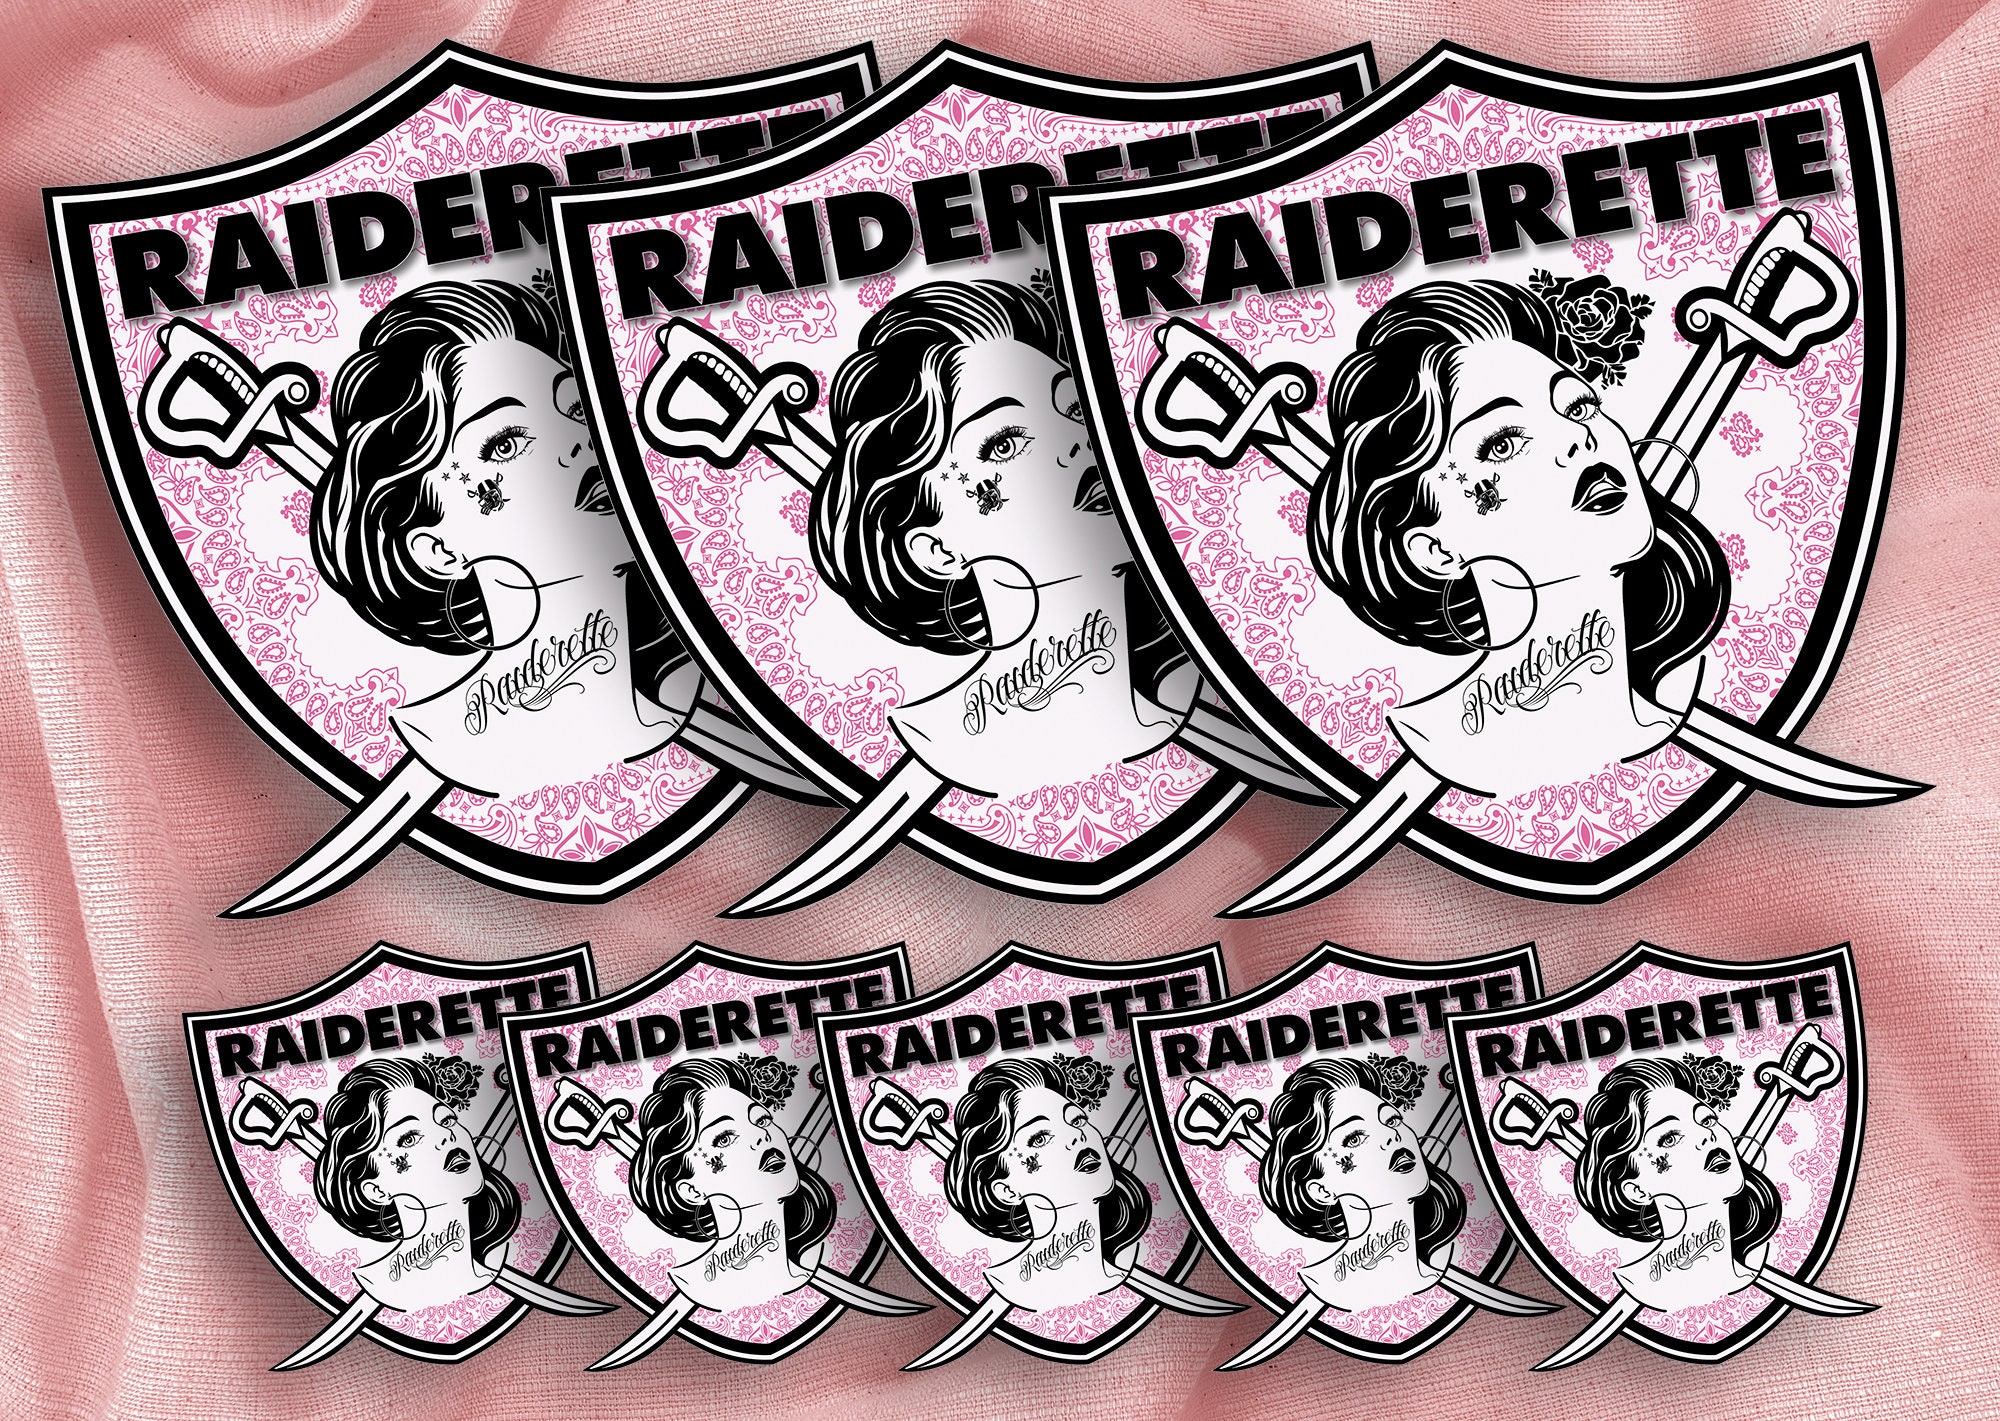 Raiders Bandana  Raiders team, Oakland raiders wallpapers, Oakland raiders  logo